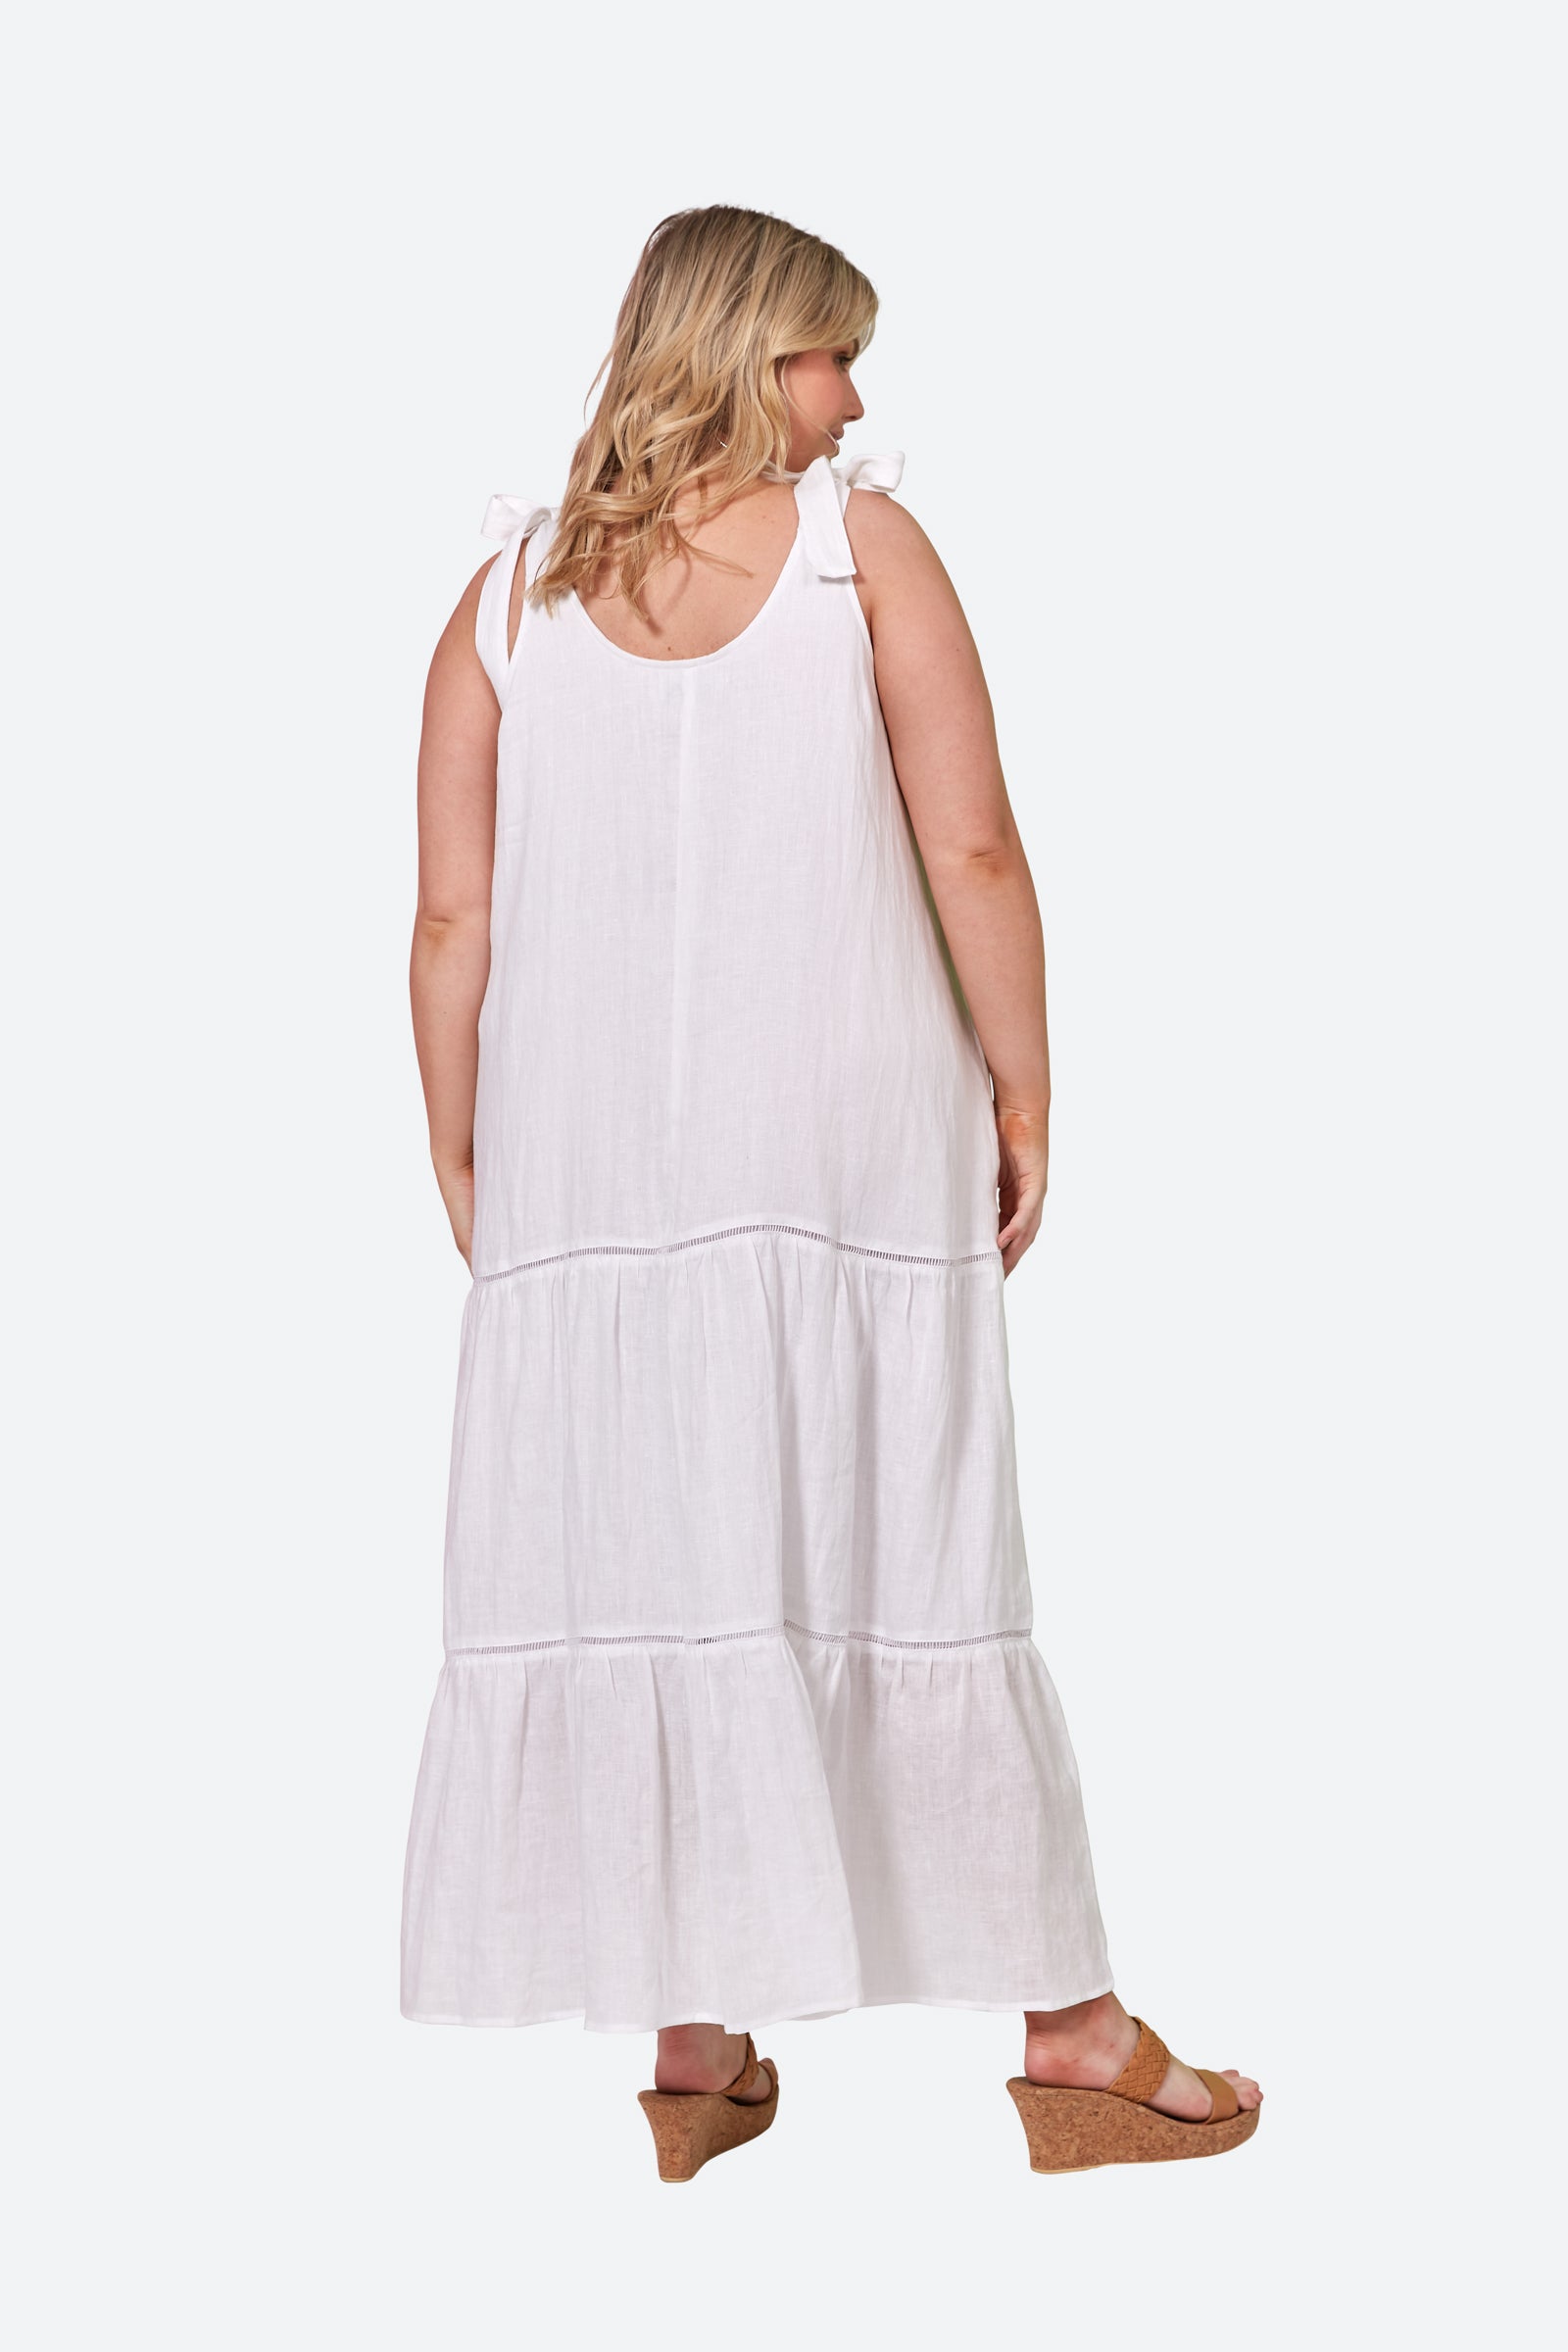 La Vie Tie Maxi - Blanc - eb&ive Clothing - Dress Strappy Maxi Linen